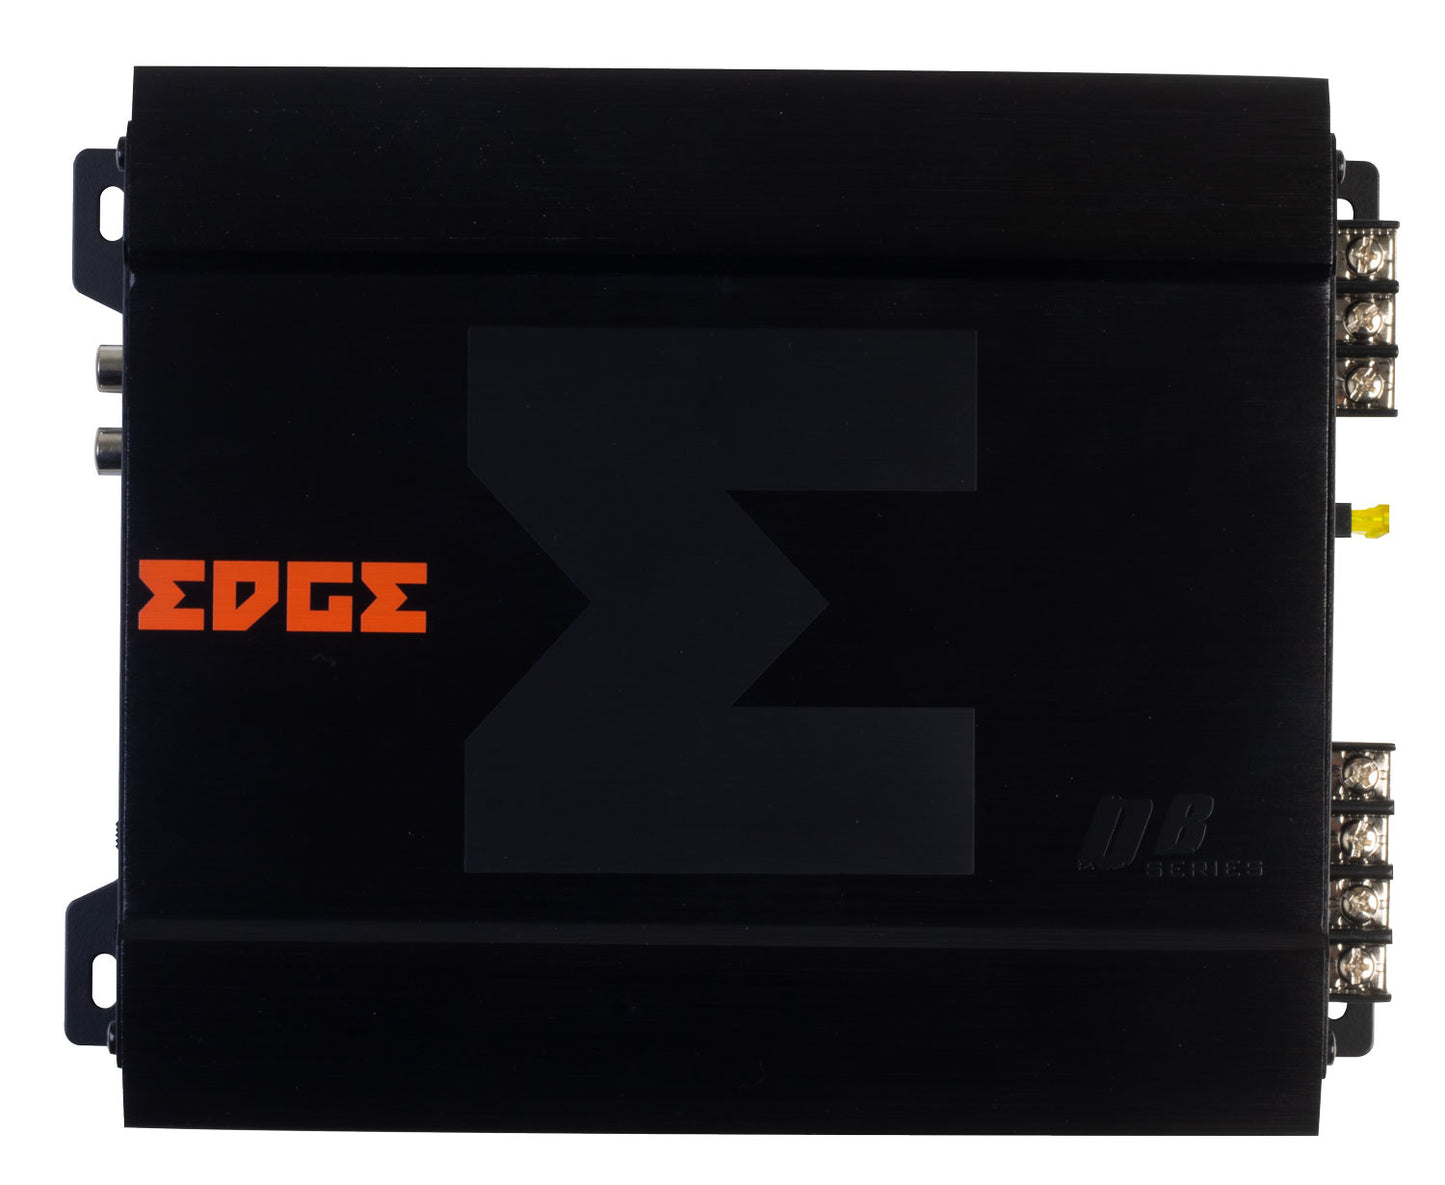 EDB80.2LITE-E2 | EDGE DB Series 2 Channel 320 watts Amplifier